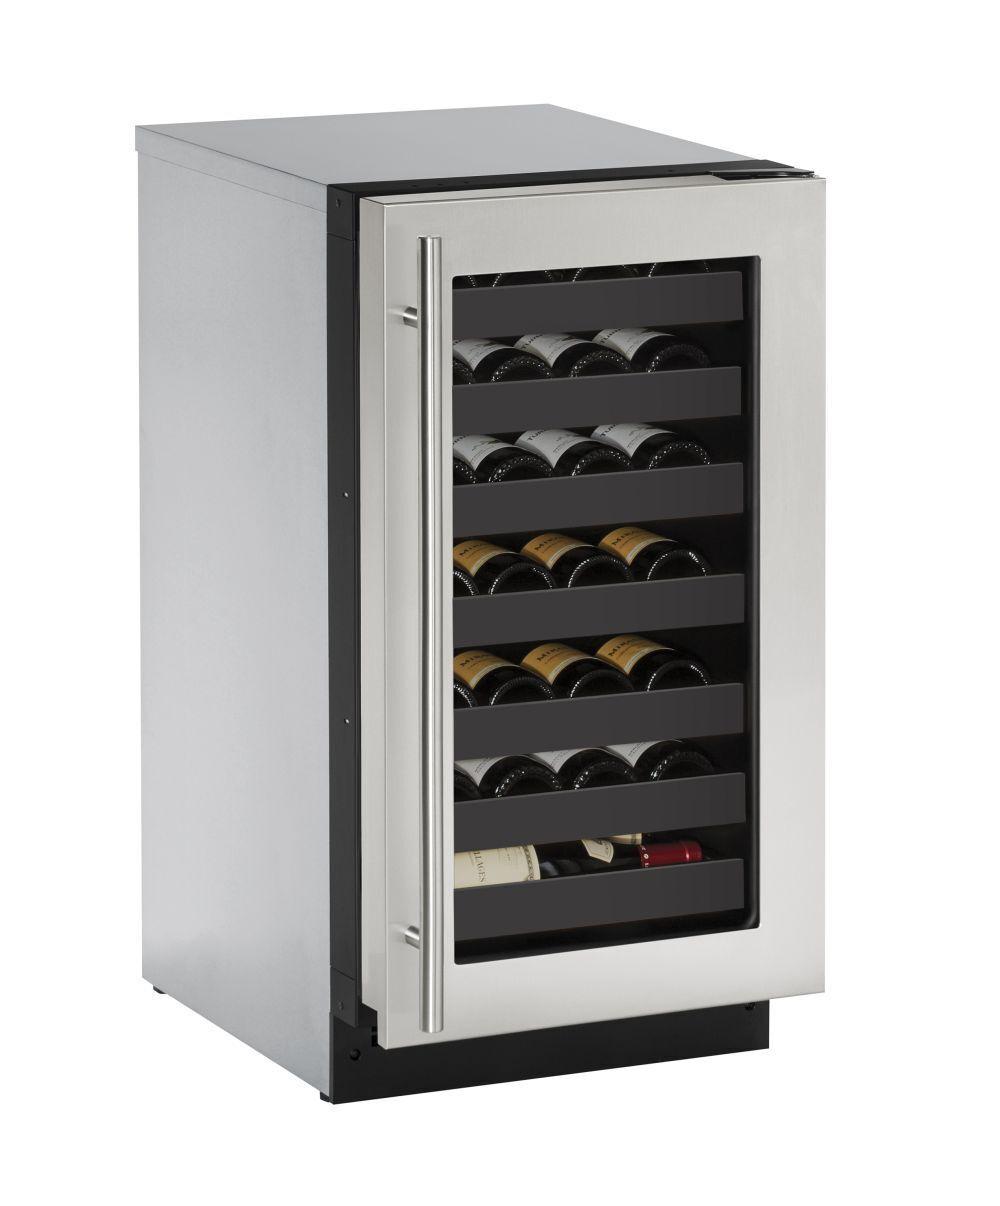 U-Line 18" Wine Refrigerator With Stainless Frame Finish (115 V/60 Hz Volts /60 Hz Hz)